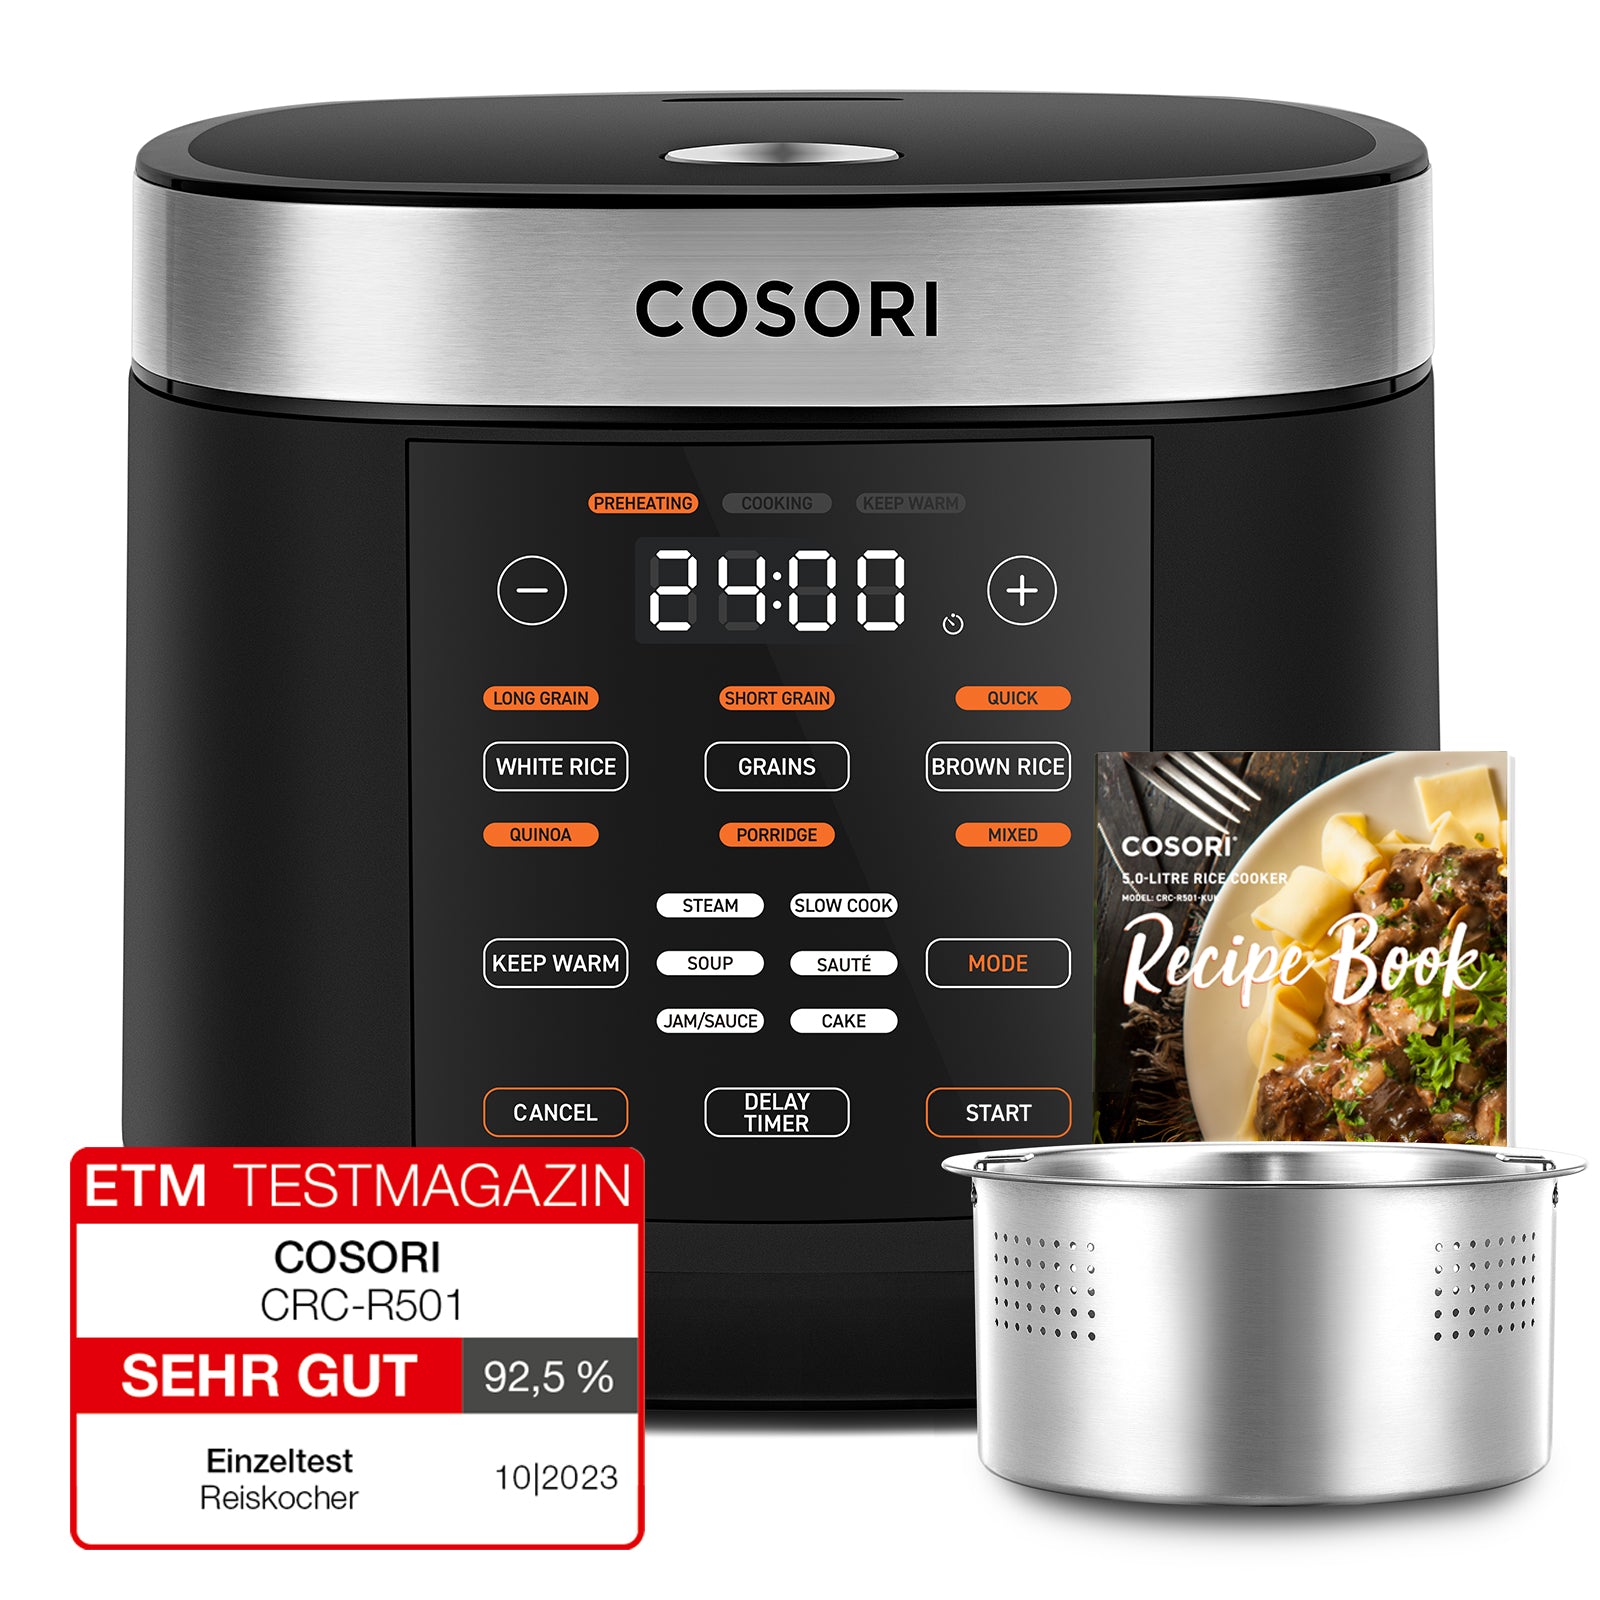 COSORI 5.0-Liter Rice Cooker schwarz